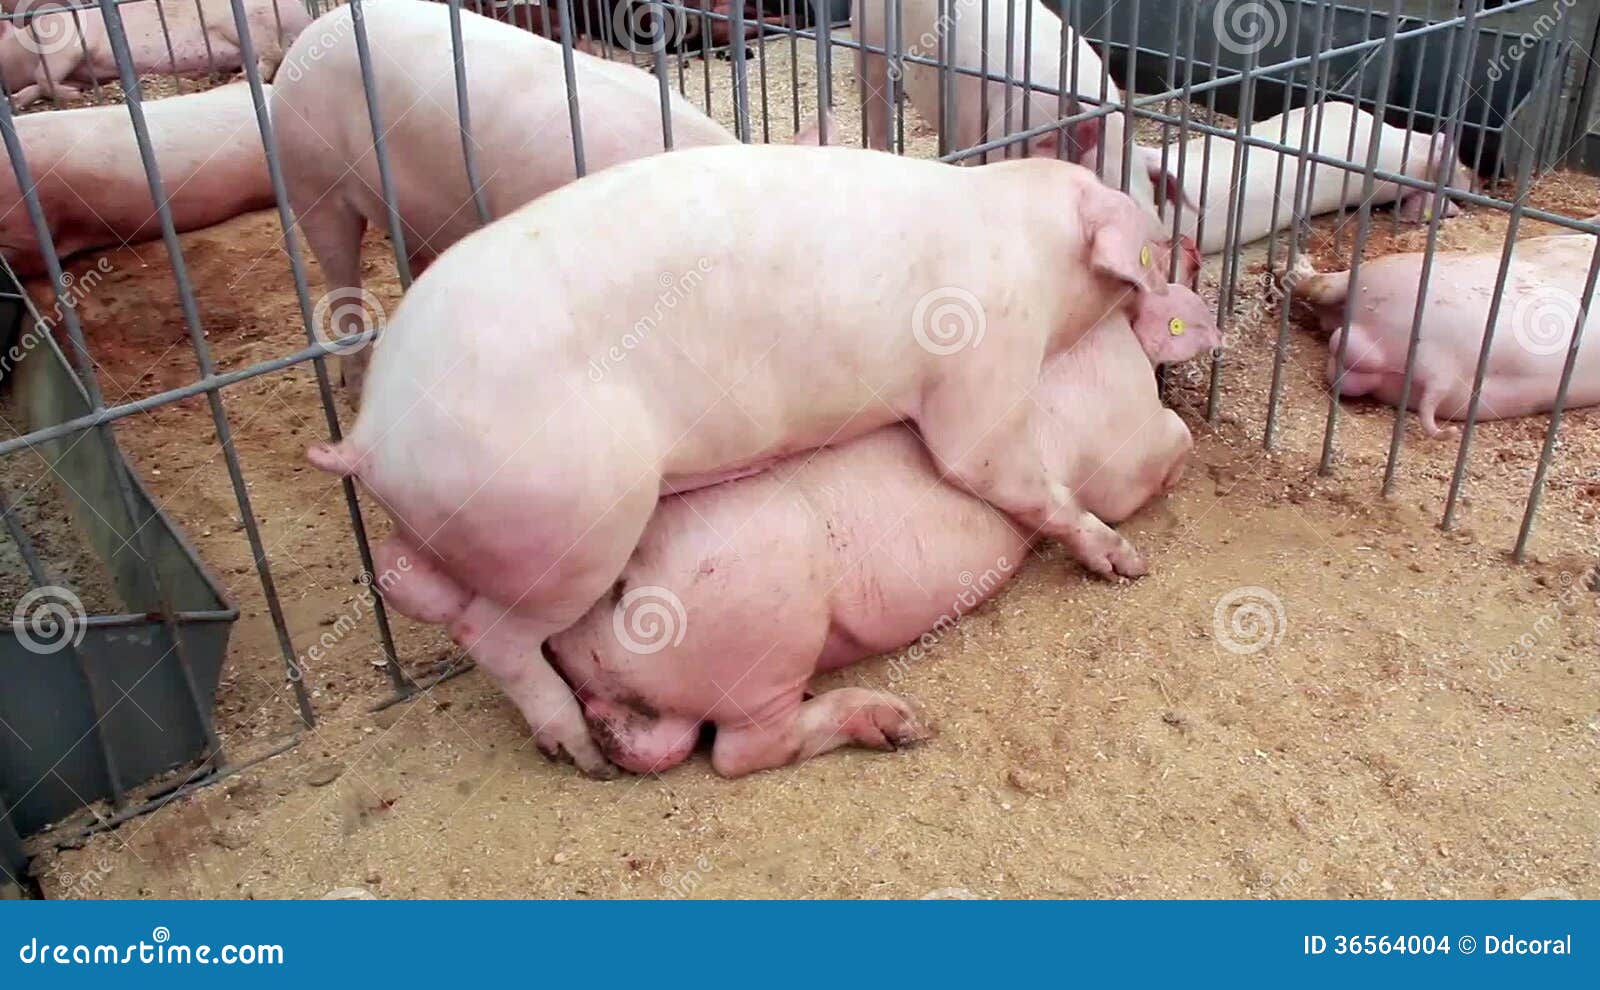 Sex in pigs in Bhopal